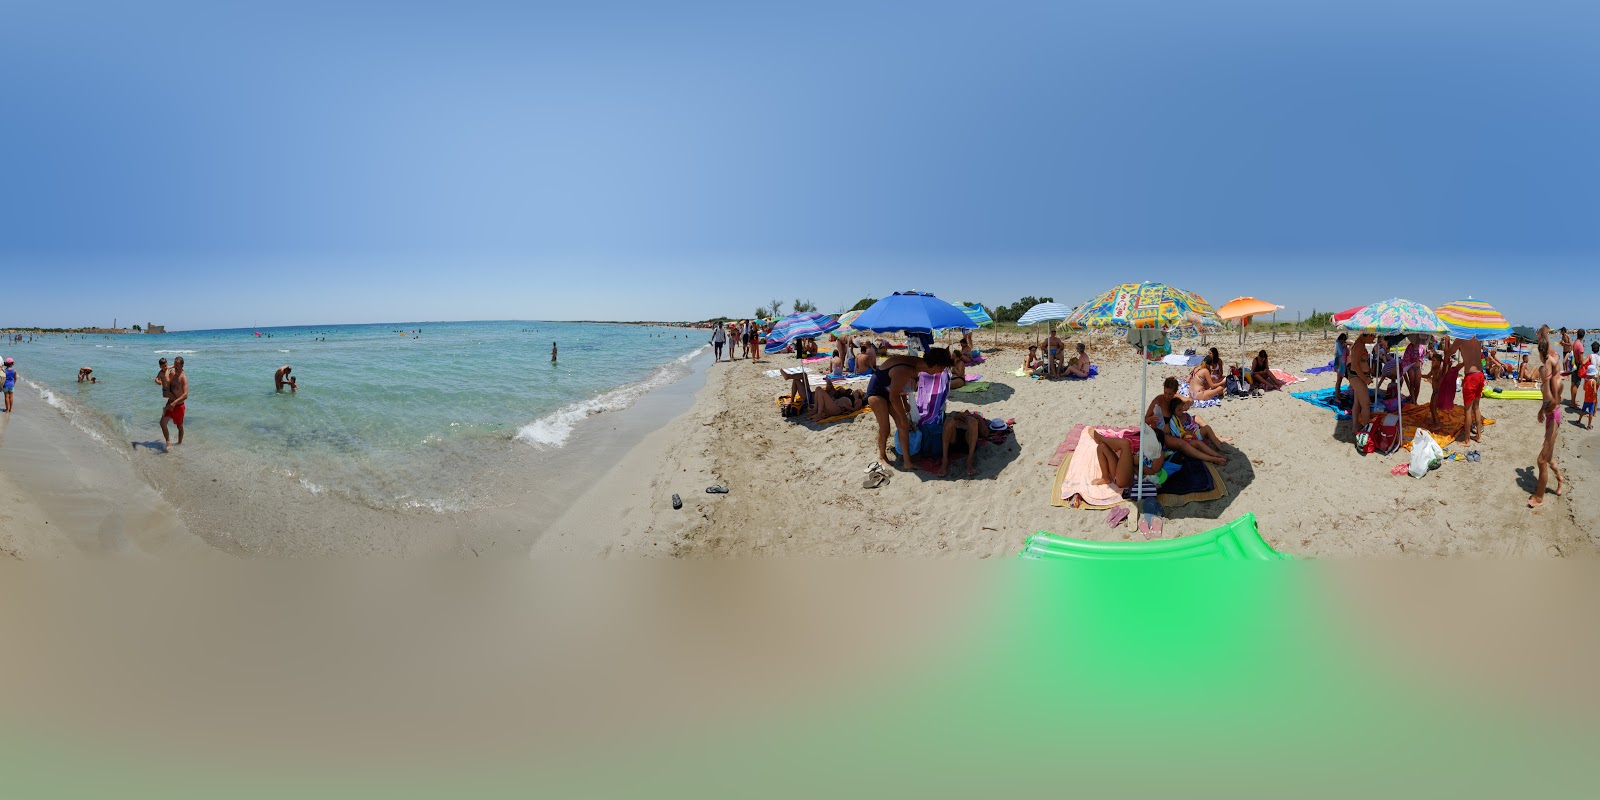 Vendicari海滩的照片 带有碧绿色纯水表面